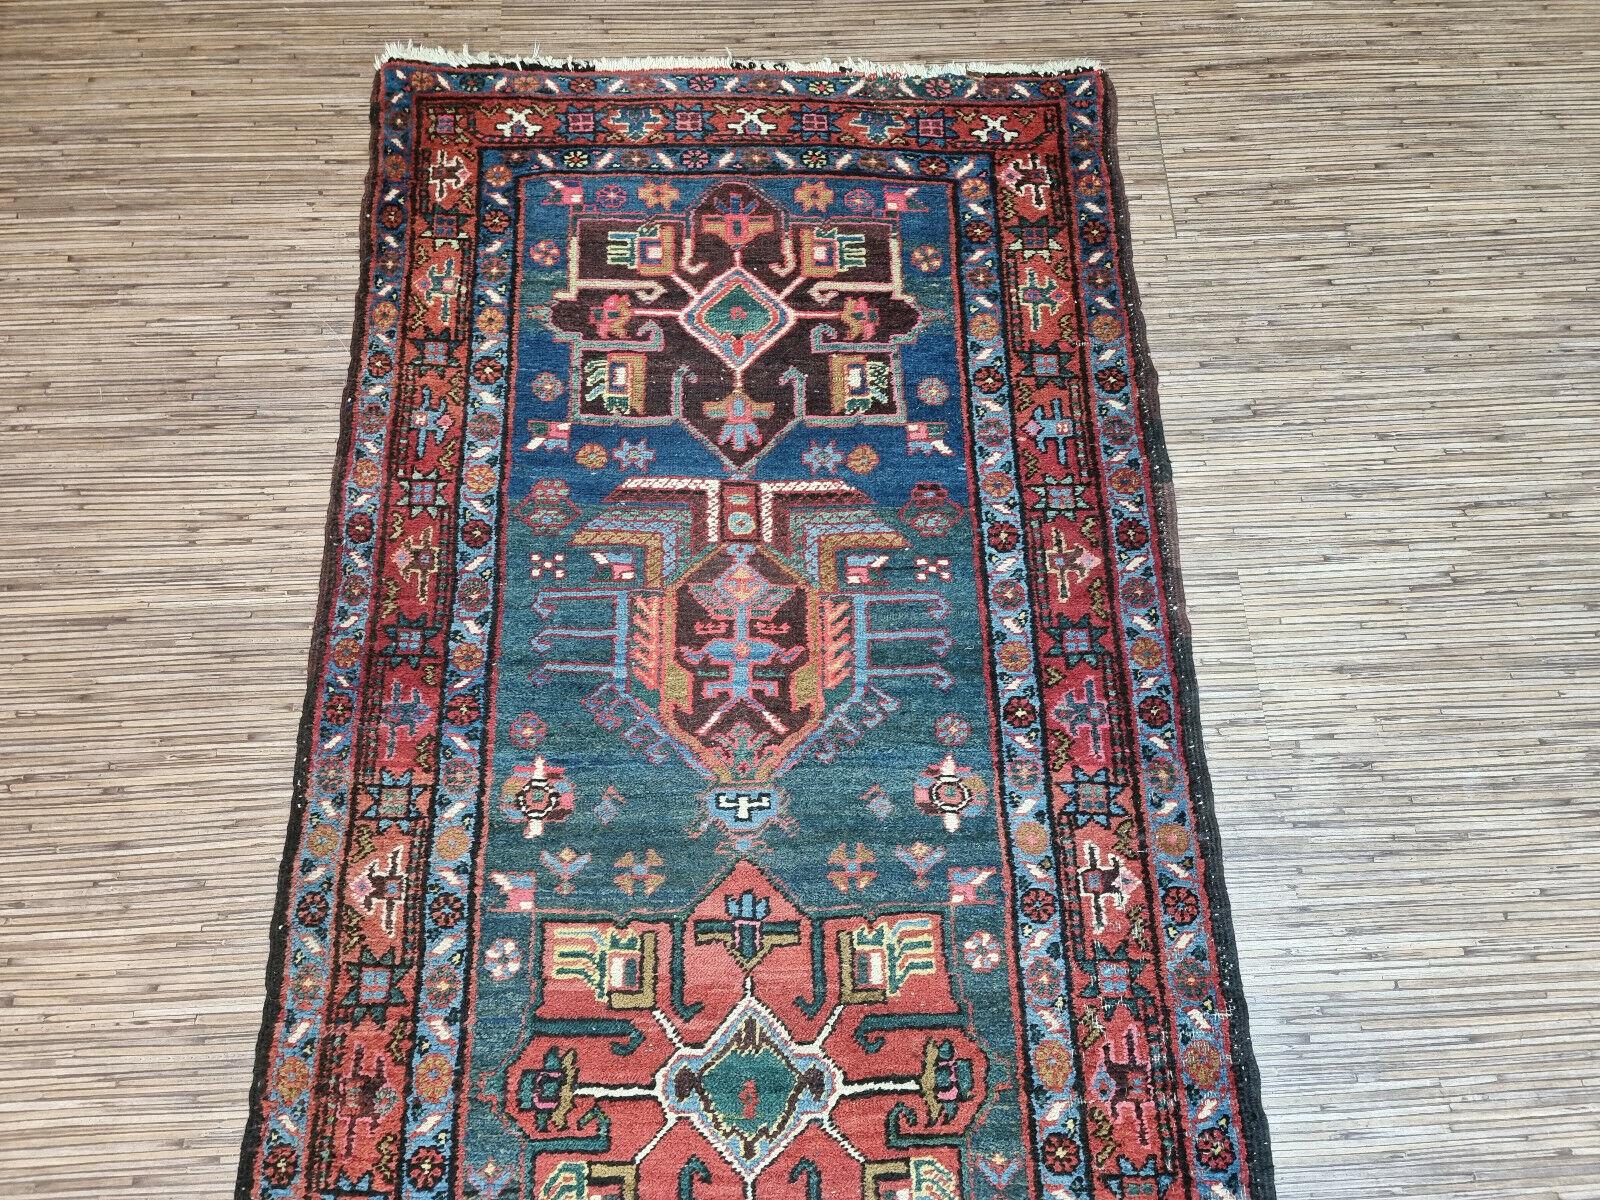 Early 20th Century Handmade Antique Persian Style Heriz Runner Rug 2.8' x 13.7', 1900s - 1D80